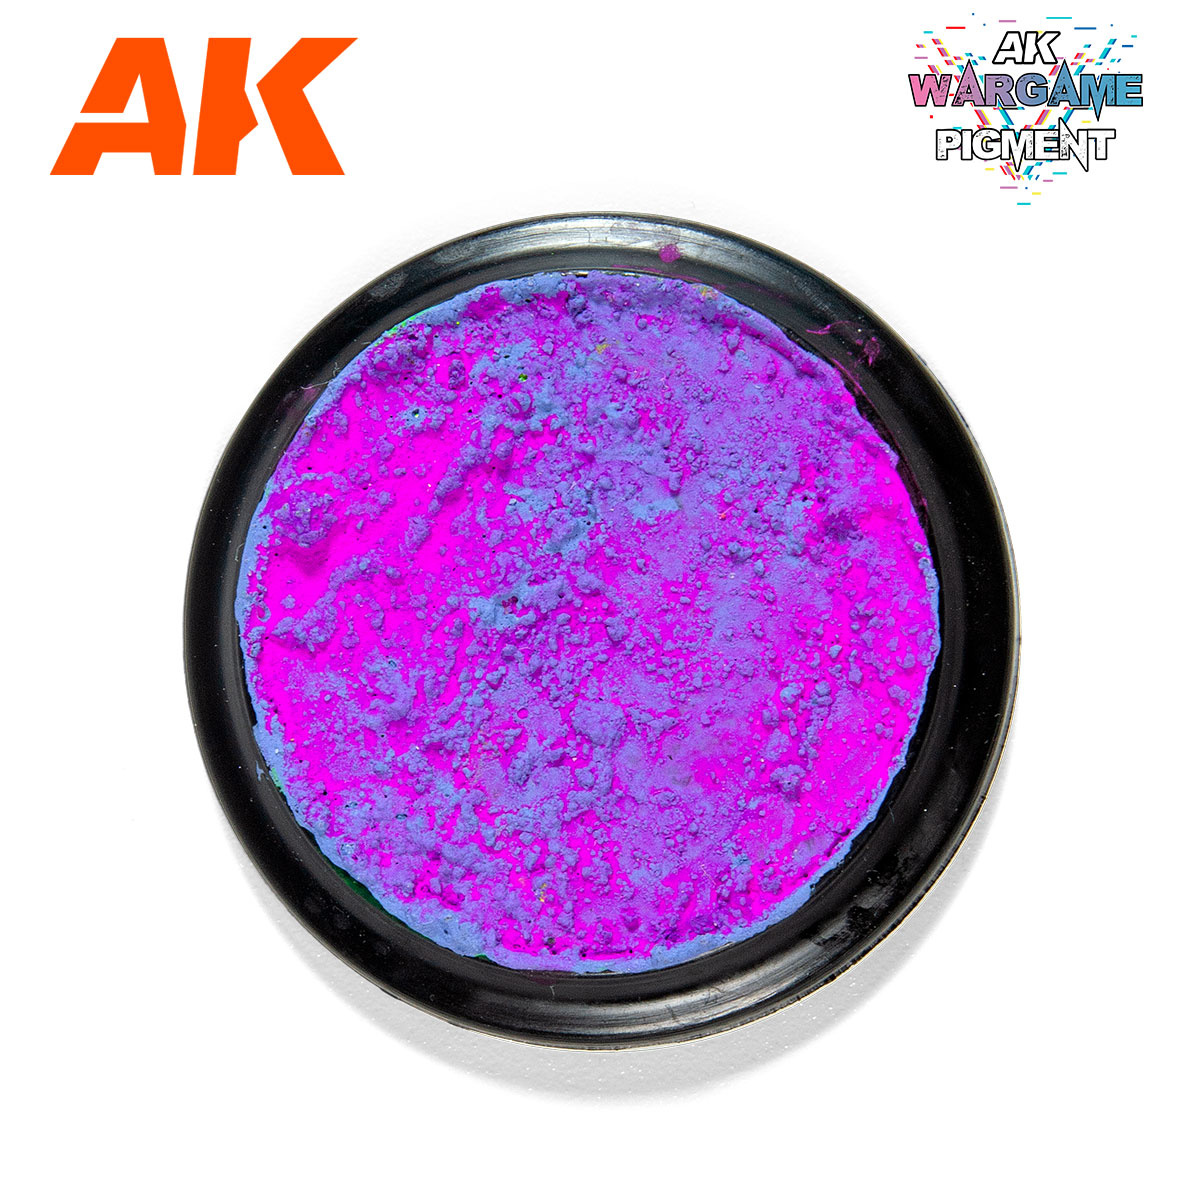 AK-Interactive Purple Fluor - Wargame Liquid Pigment - 35ml - AK-Interactive - AK-1242